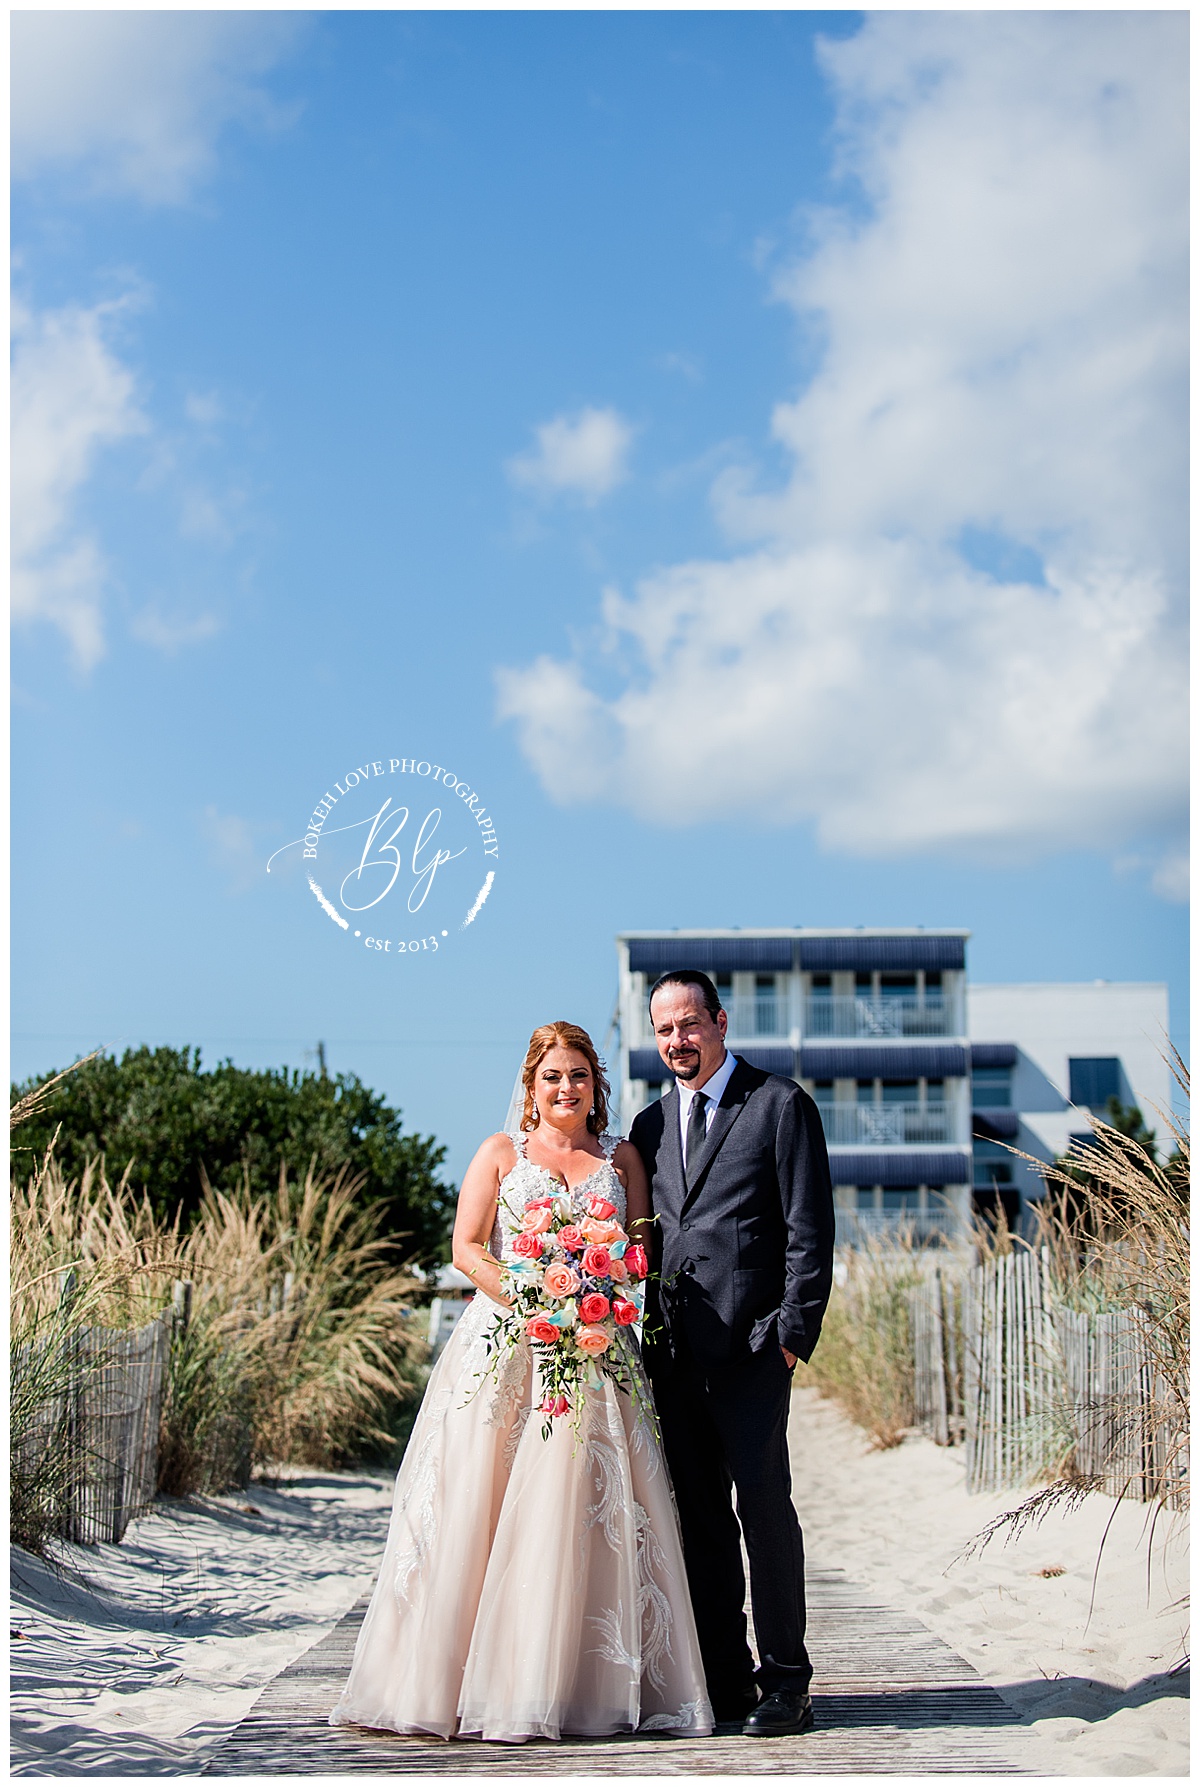 Bokeh Love Photography, Cape May Beach Wedding, Getting Reach Photos, beach wedding